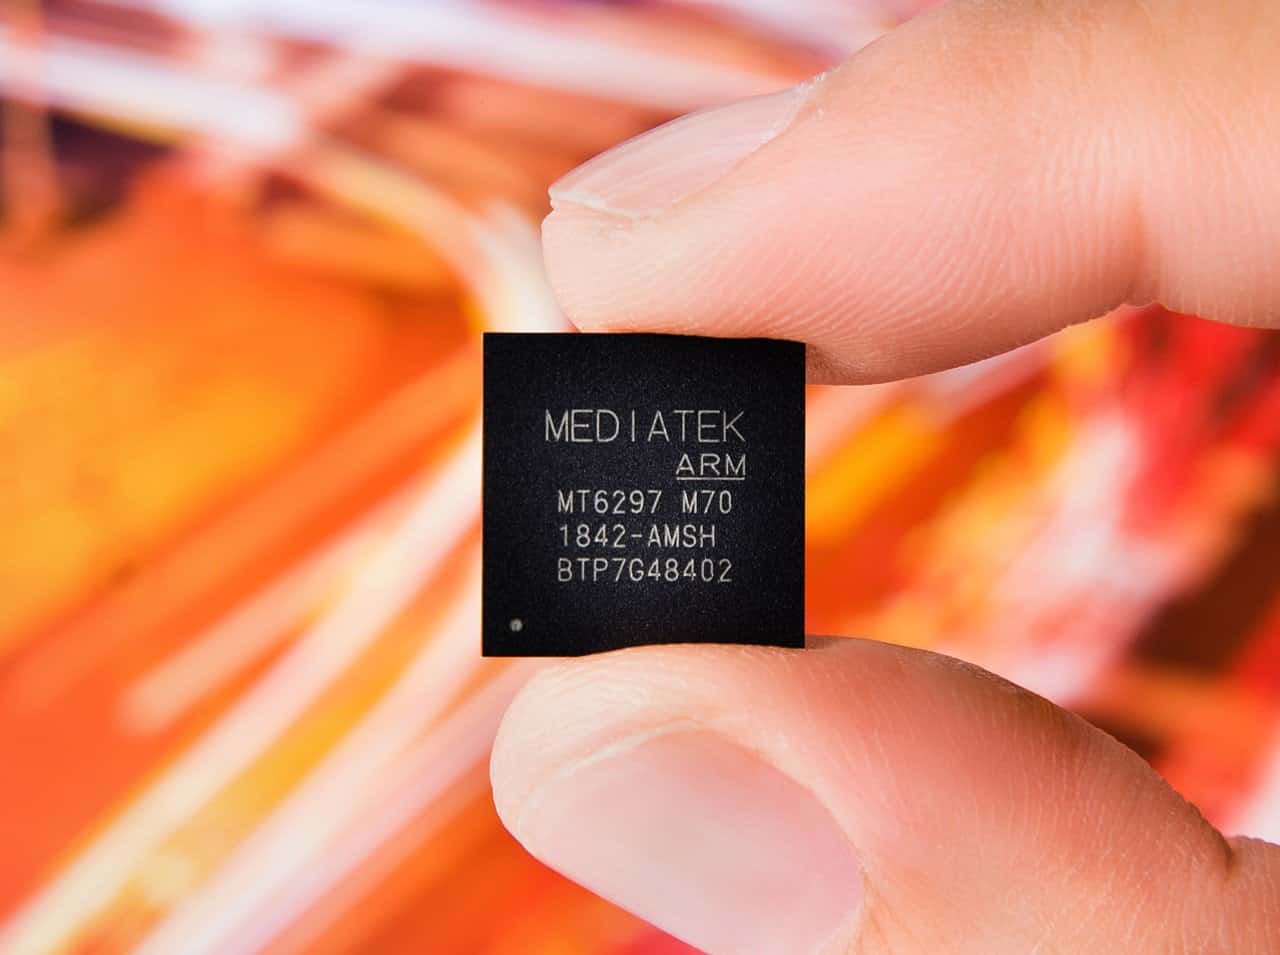 Mediatek helio m70 5g baseband chipset reported, will start shipping next year